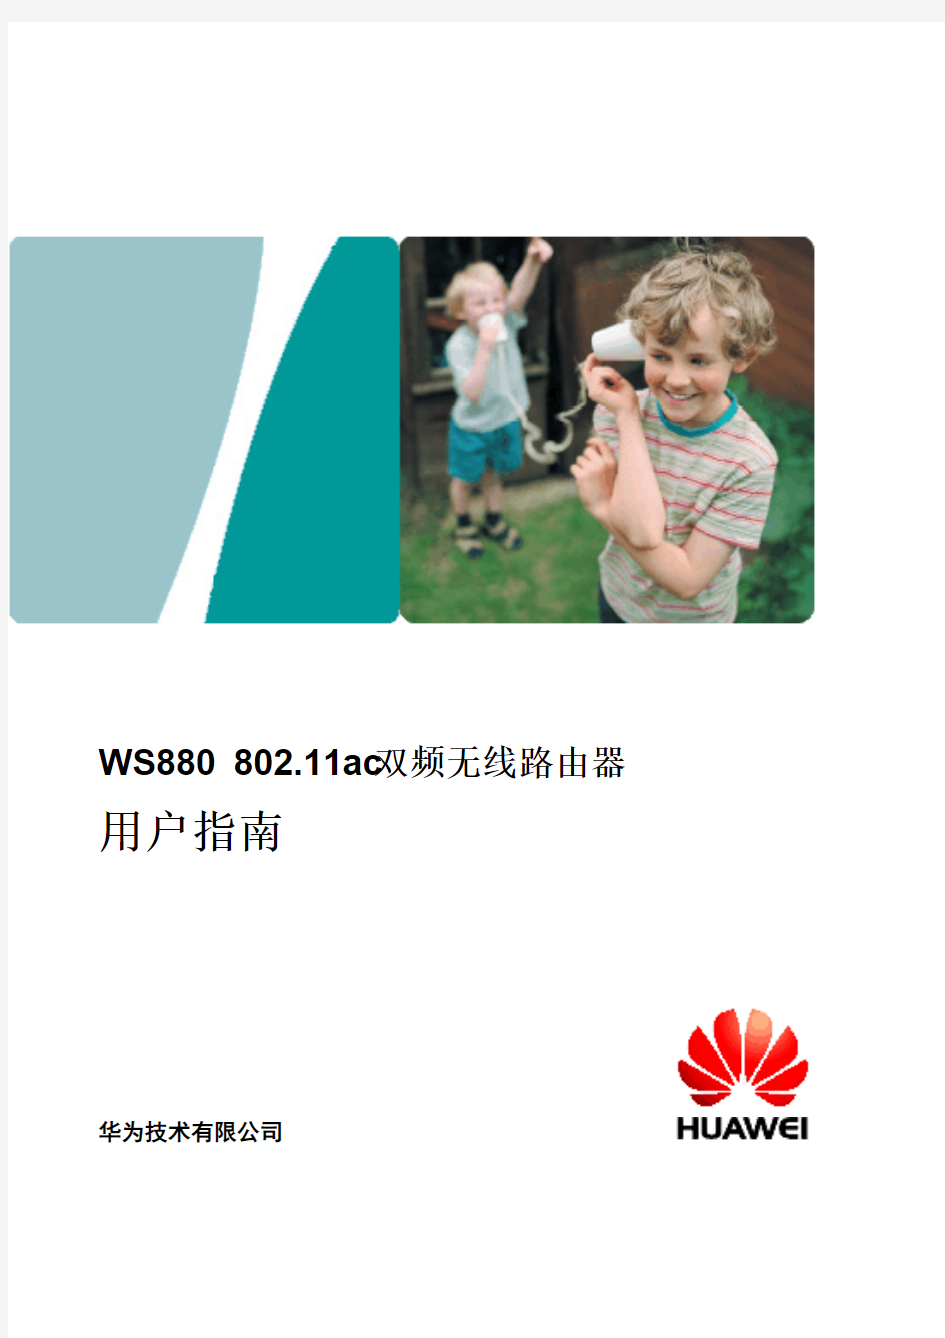 WS880双频无线路由器_用户指南_01_中文_渠道